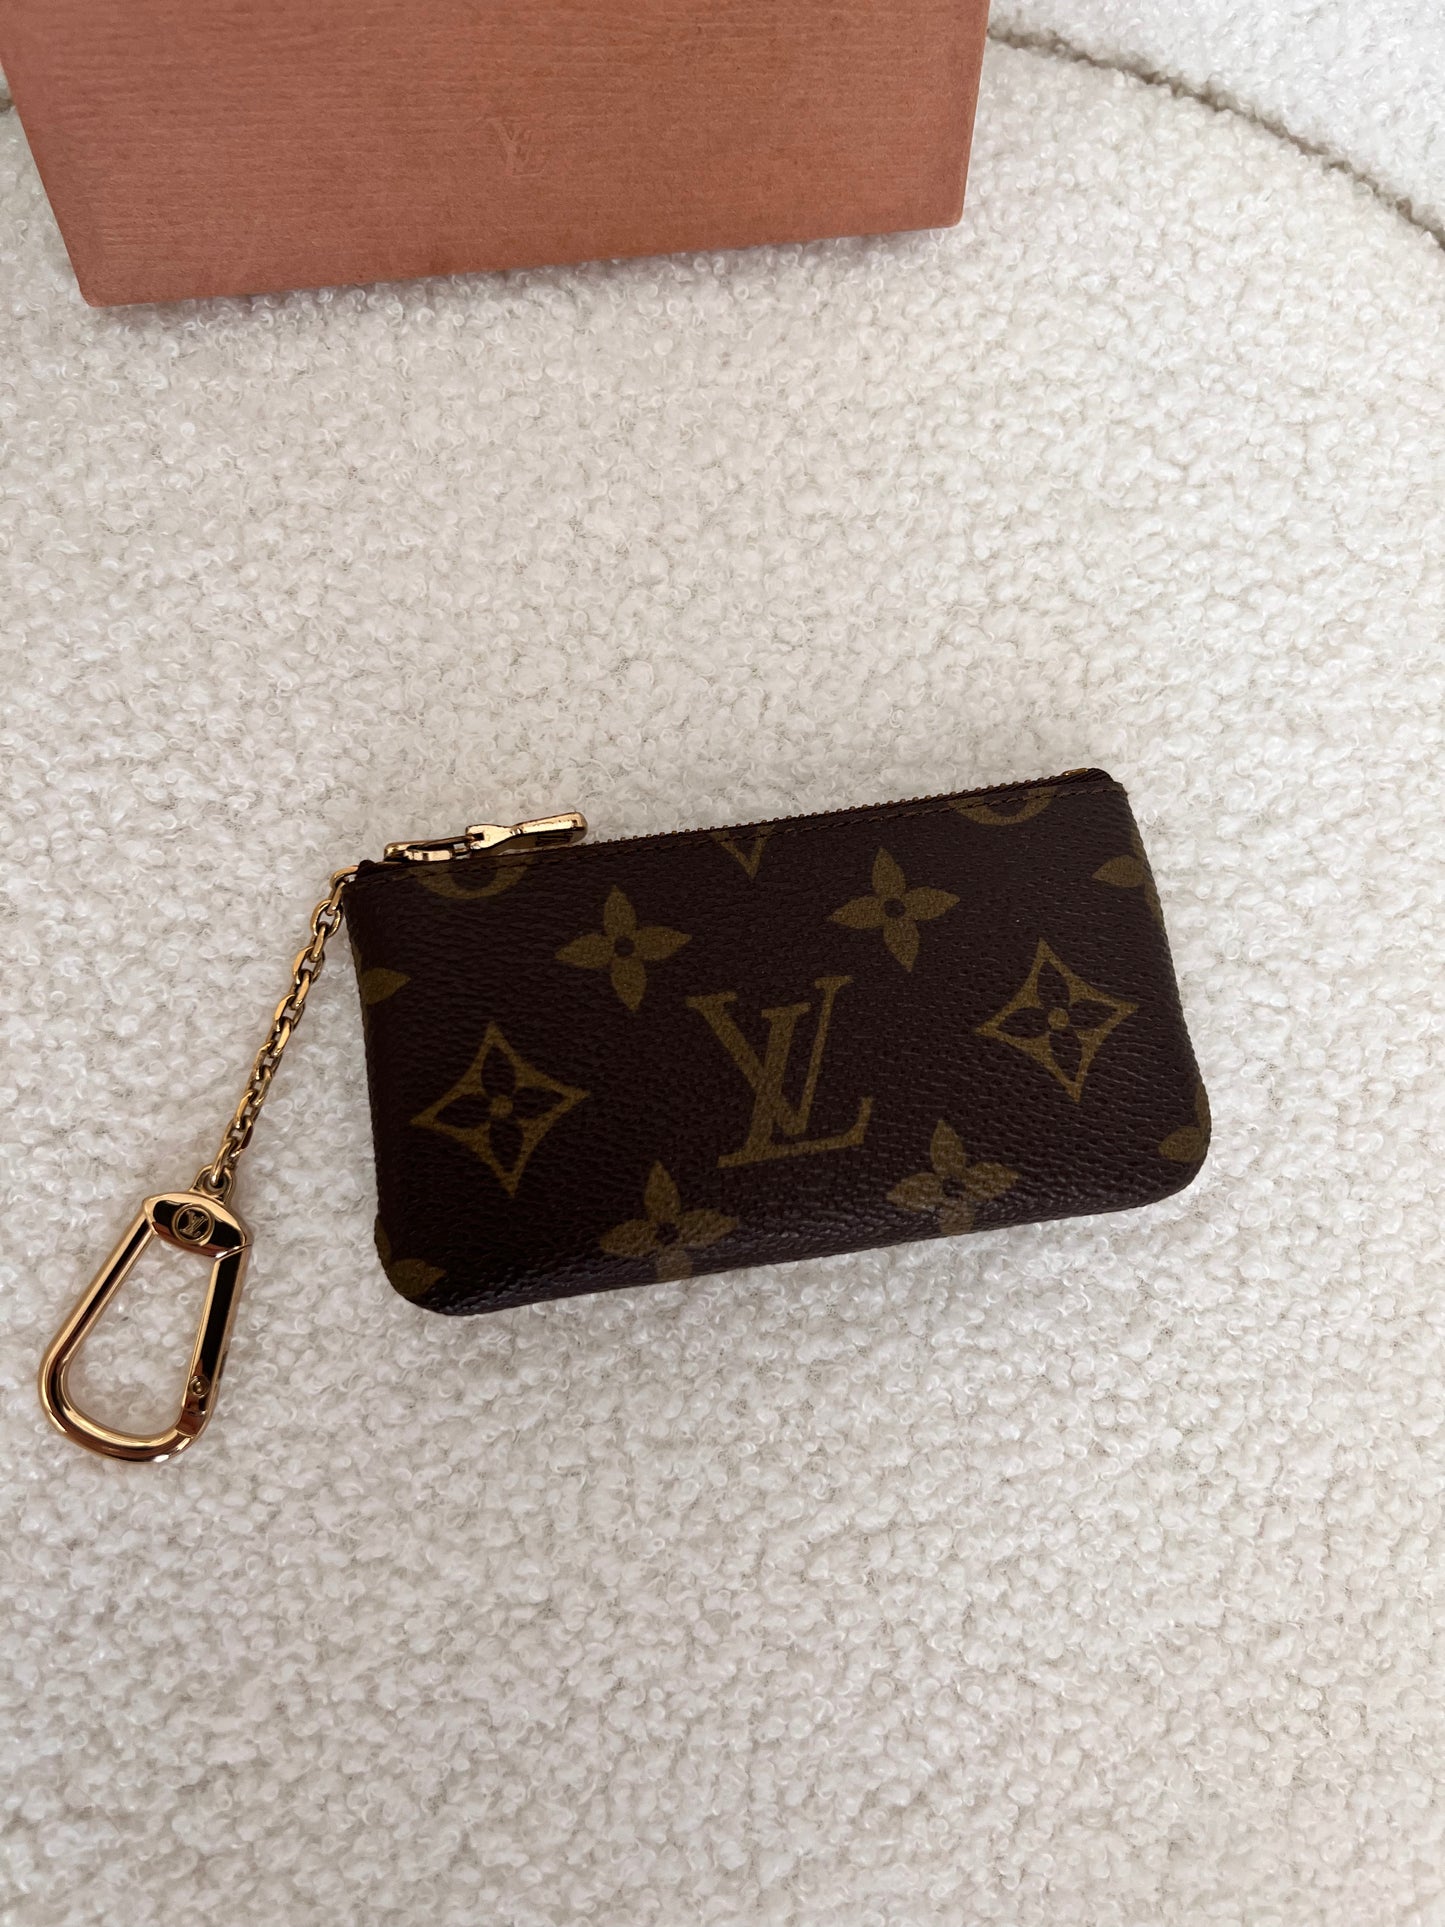 Louis Vuitton monogram key pouch with box